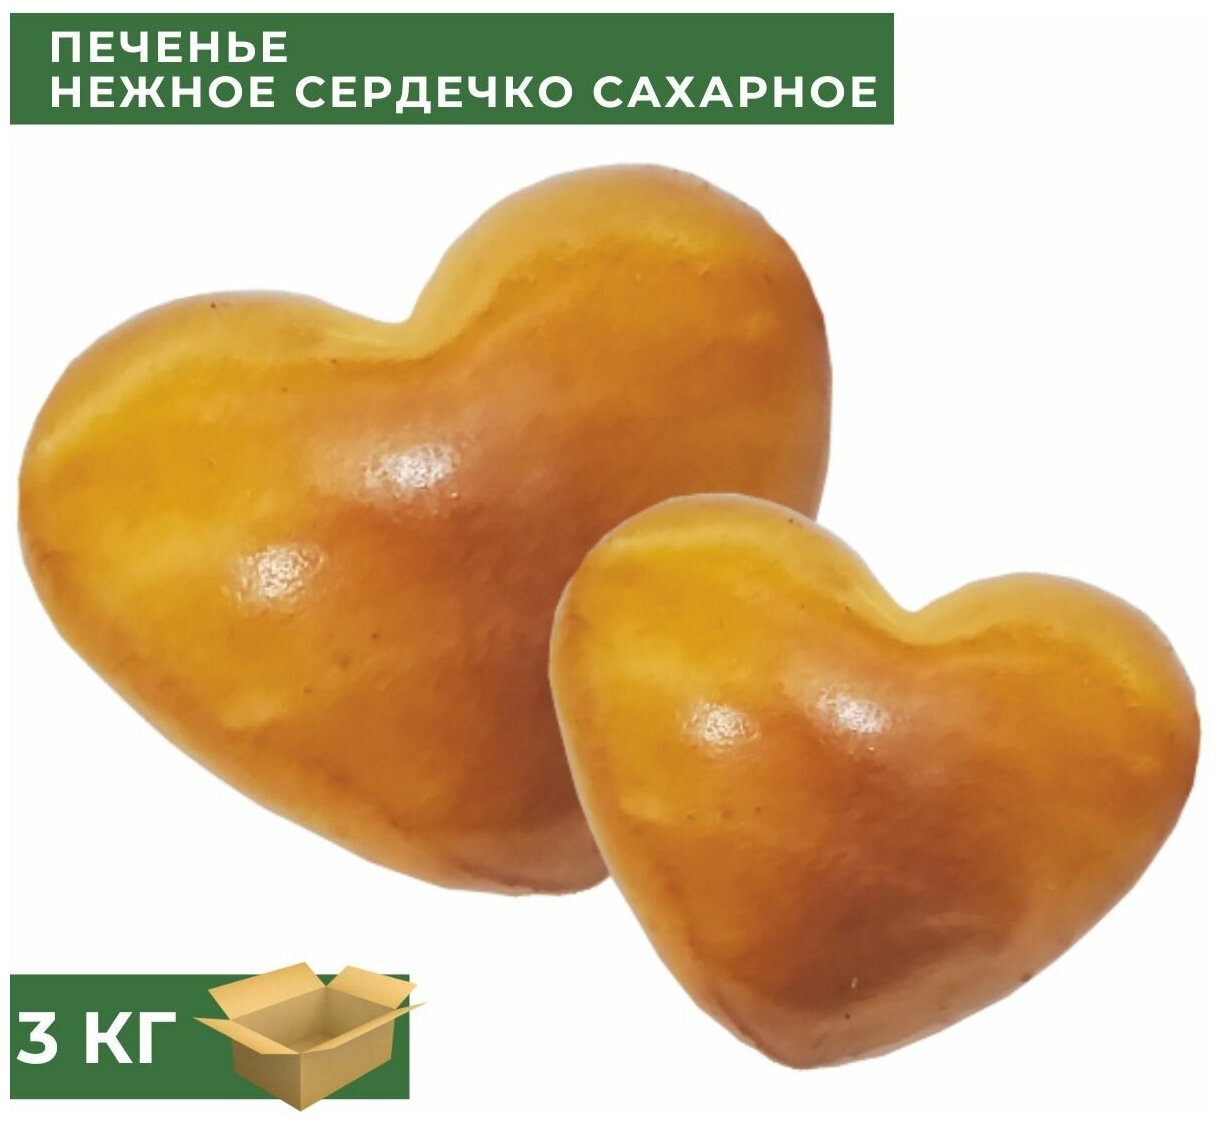 Печенье нежное сердечко сахарное 3 кг , Завод Алёшина